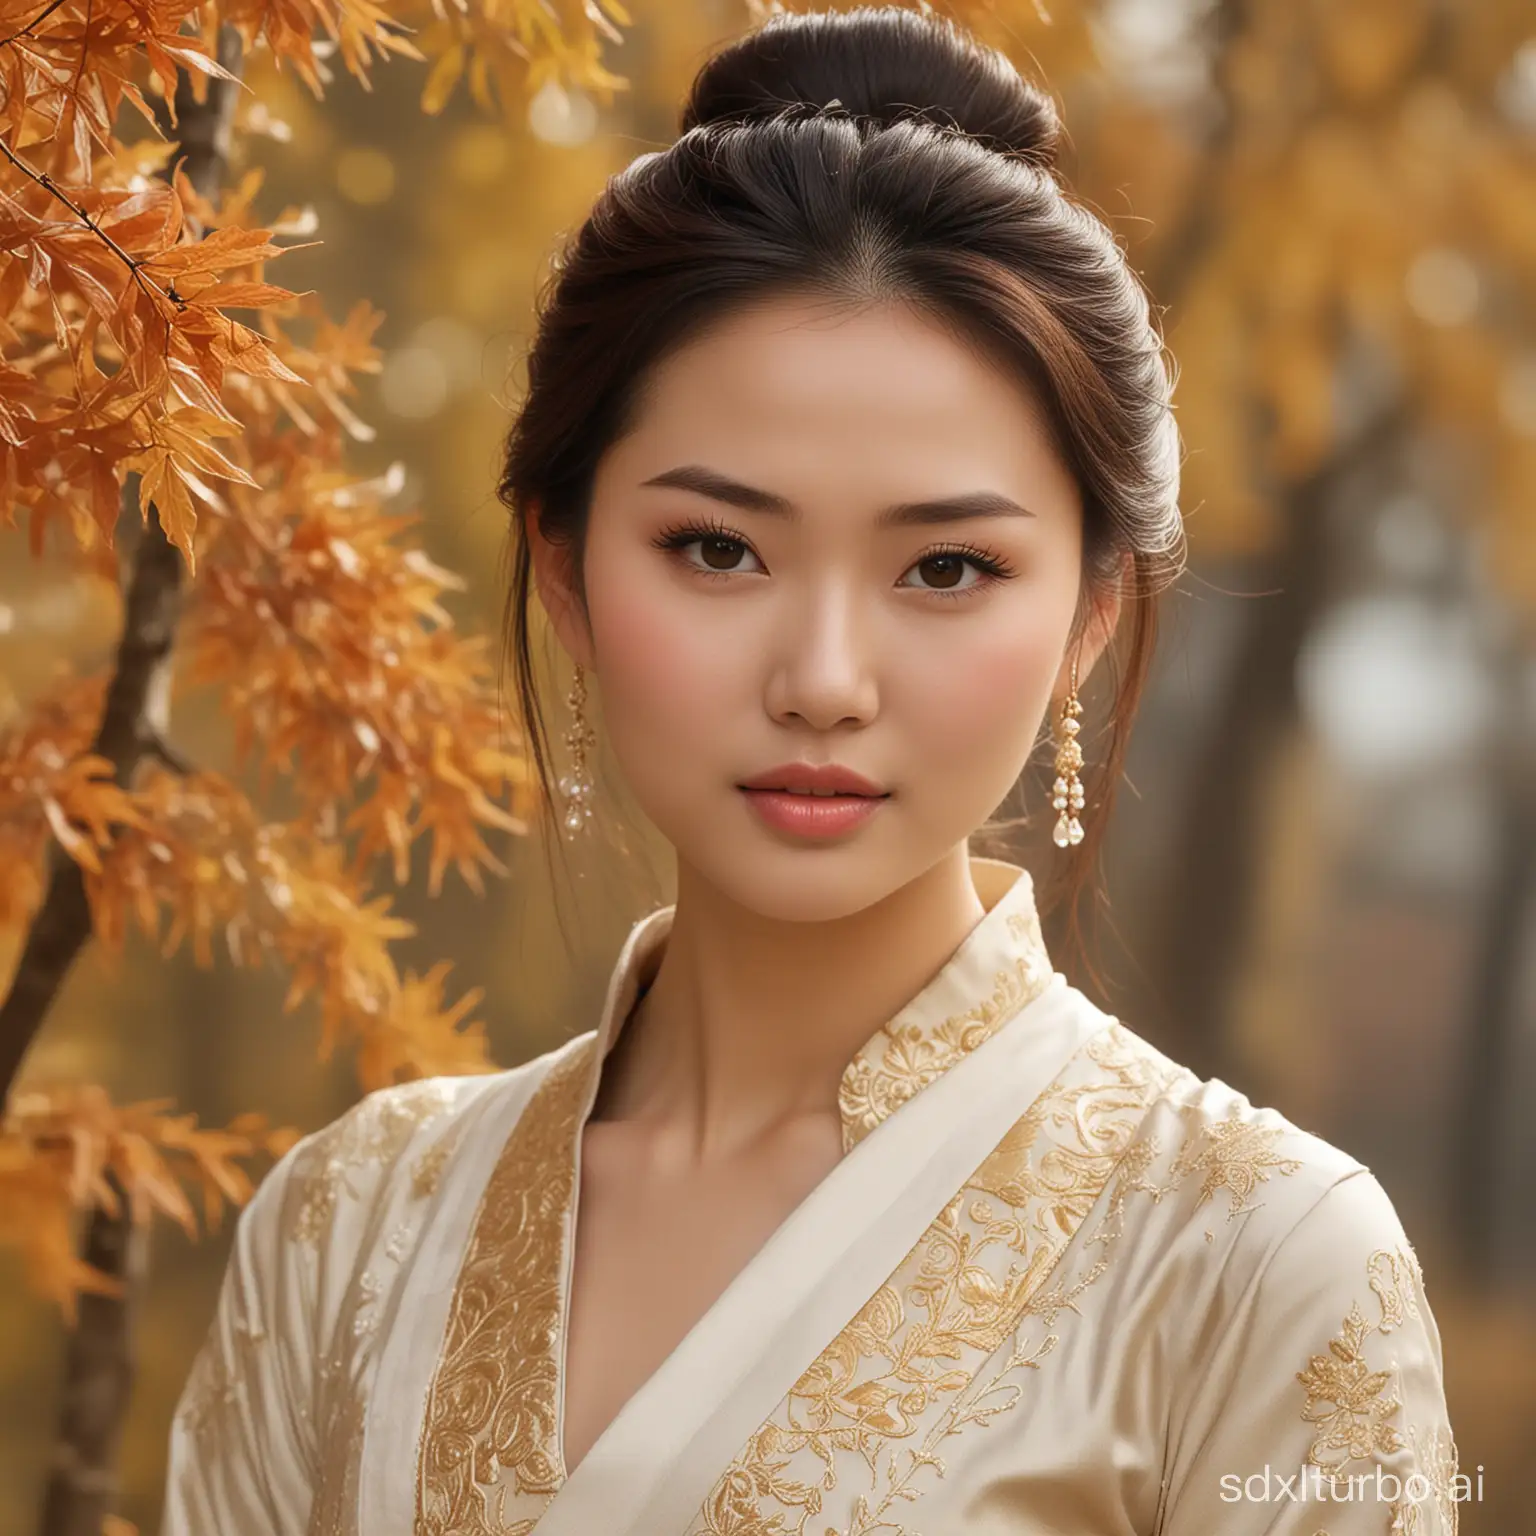 Elegant-Asian-Women-Delicate-Beauty-in-Autumn